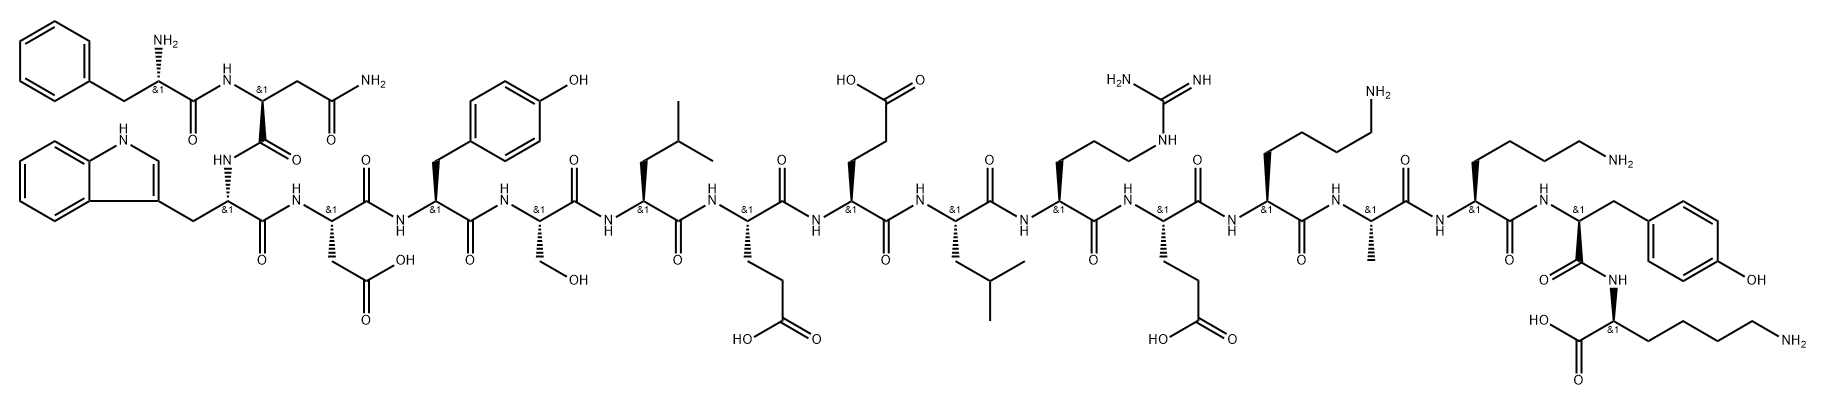 2135542-85-5 L-Lysine, L-phenylalanyl-L-asparaginyl-L-tryptophyl-L-α-aspartyl-L-tyrosyl-L-seryl-L-leucyl-L-α-glutamyl-L-α-glutamyl-L-leucyl-L-arginyl-L-α-glutamyl-L-lysyl-L-alanyl-L-lysyl-L-tyrosyl-